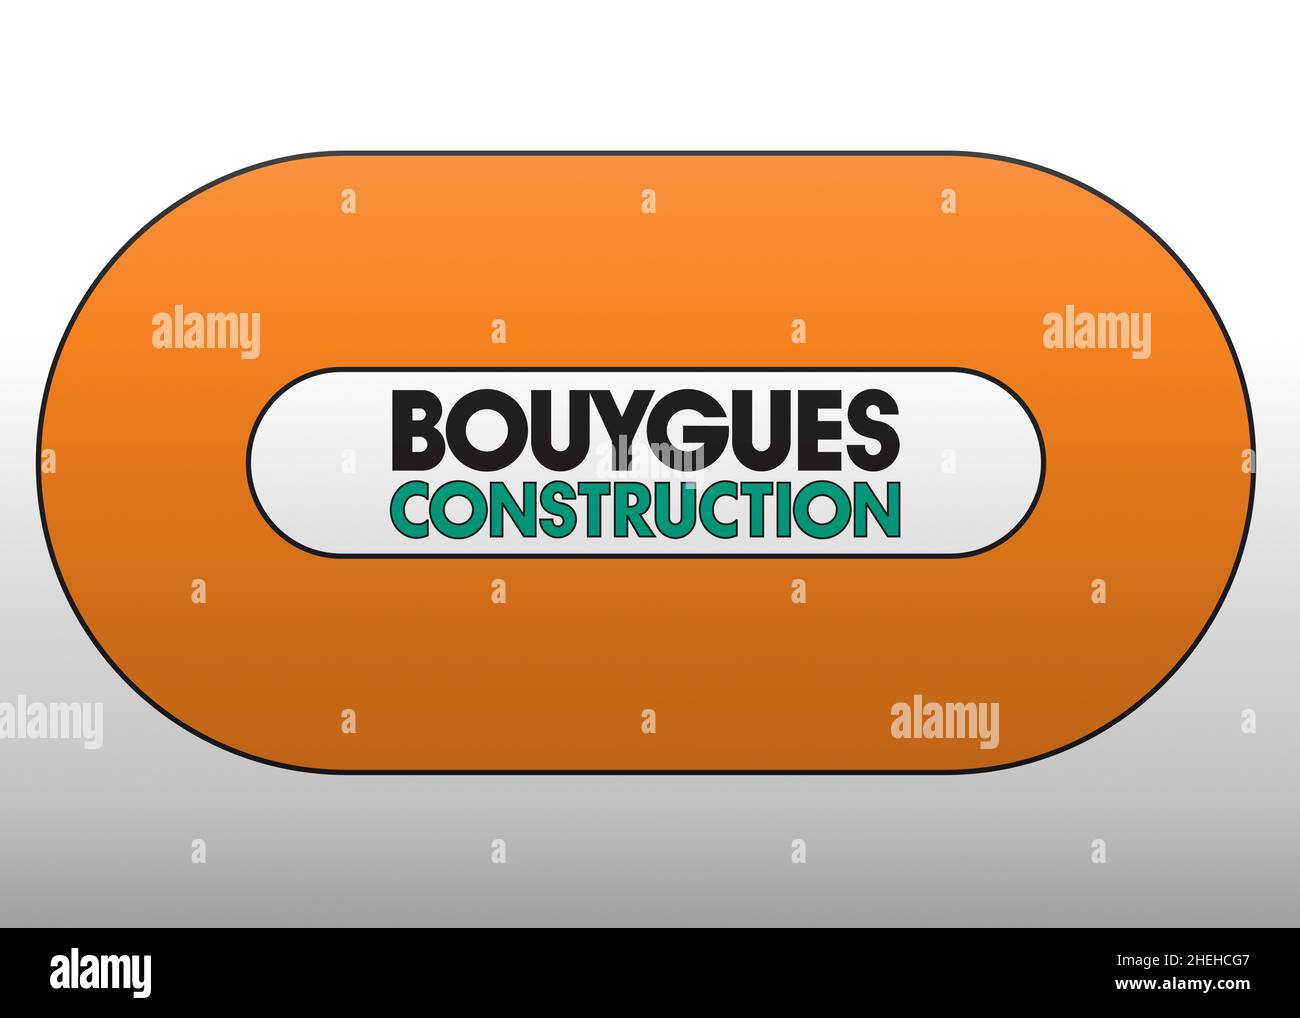 Bouygues Construction logo Stock Photo